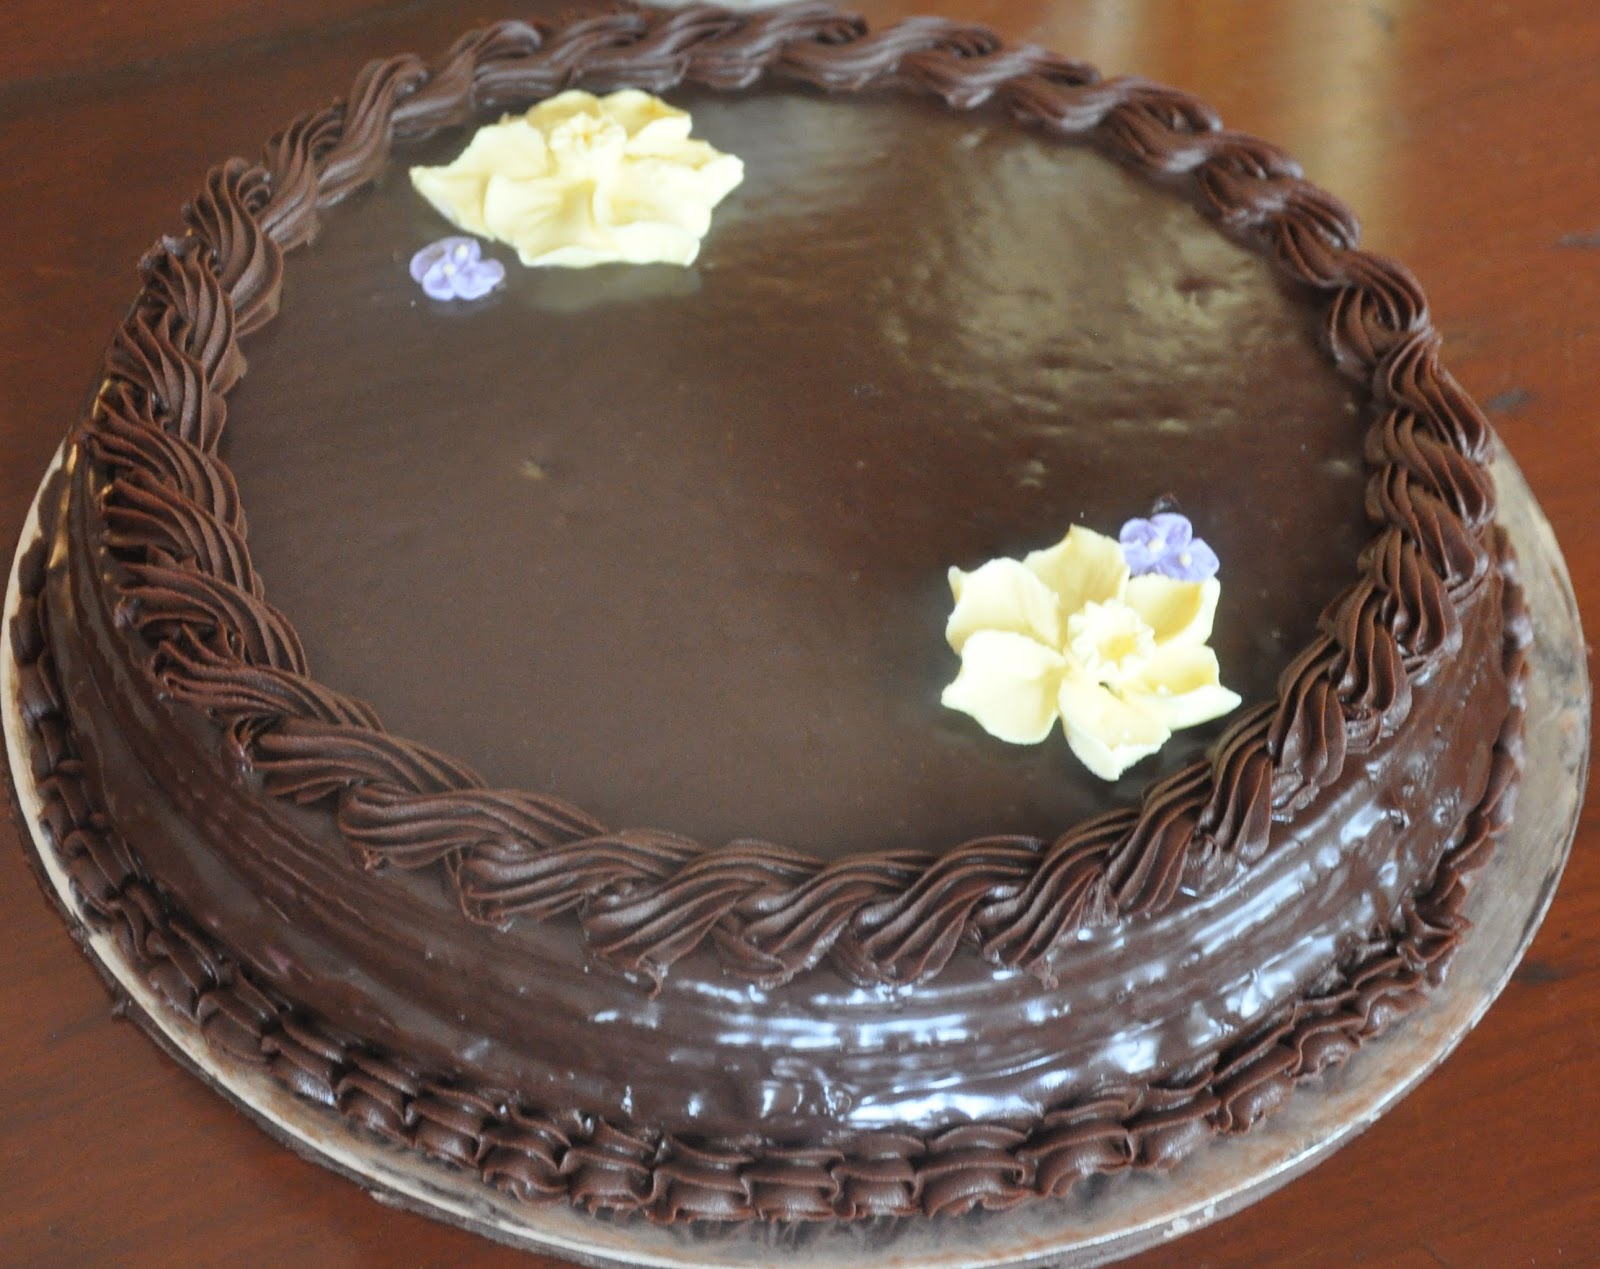 chocolate ganache cake decorations chocolate cake with chocolate ganache with royal icing flowers